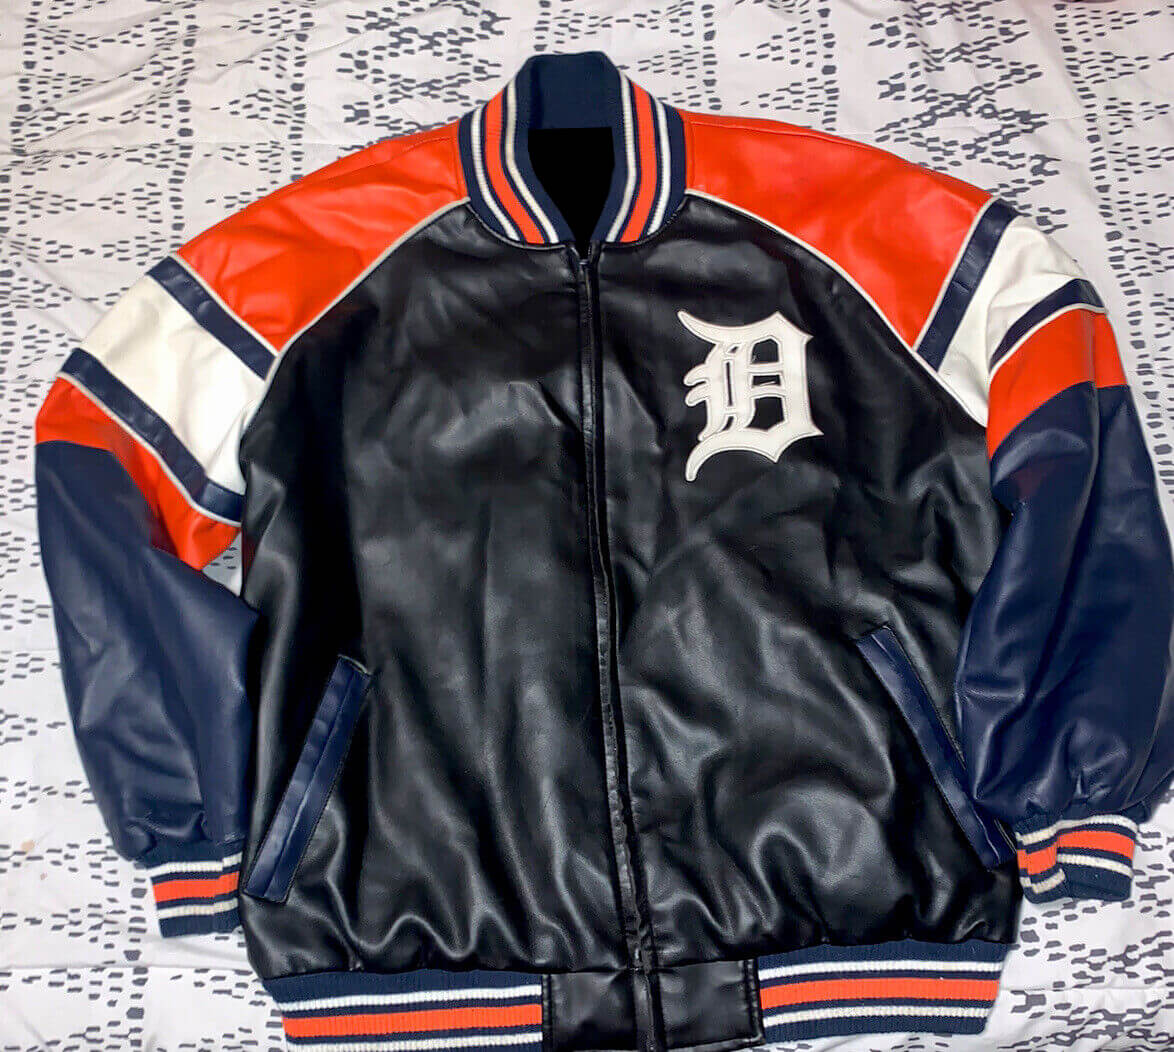 Vintage Detroit Tigers MLB Baseball Jersey T-Shirt Navy Blue Small, Vintage Online